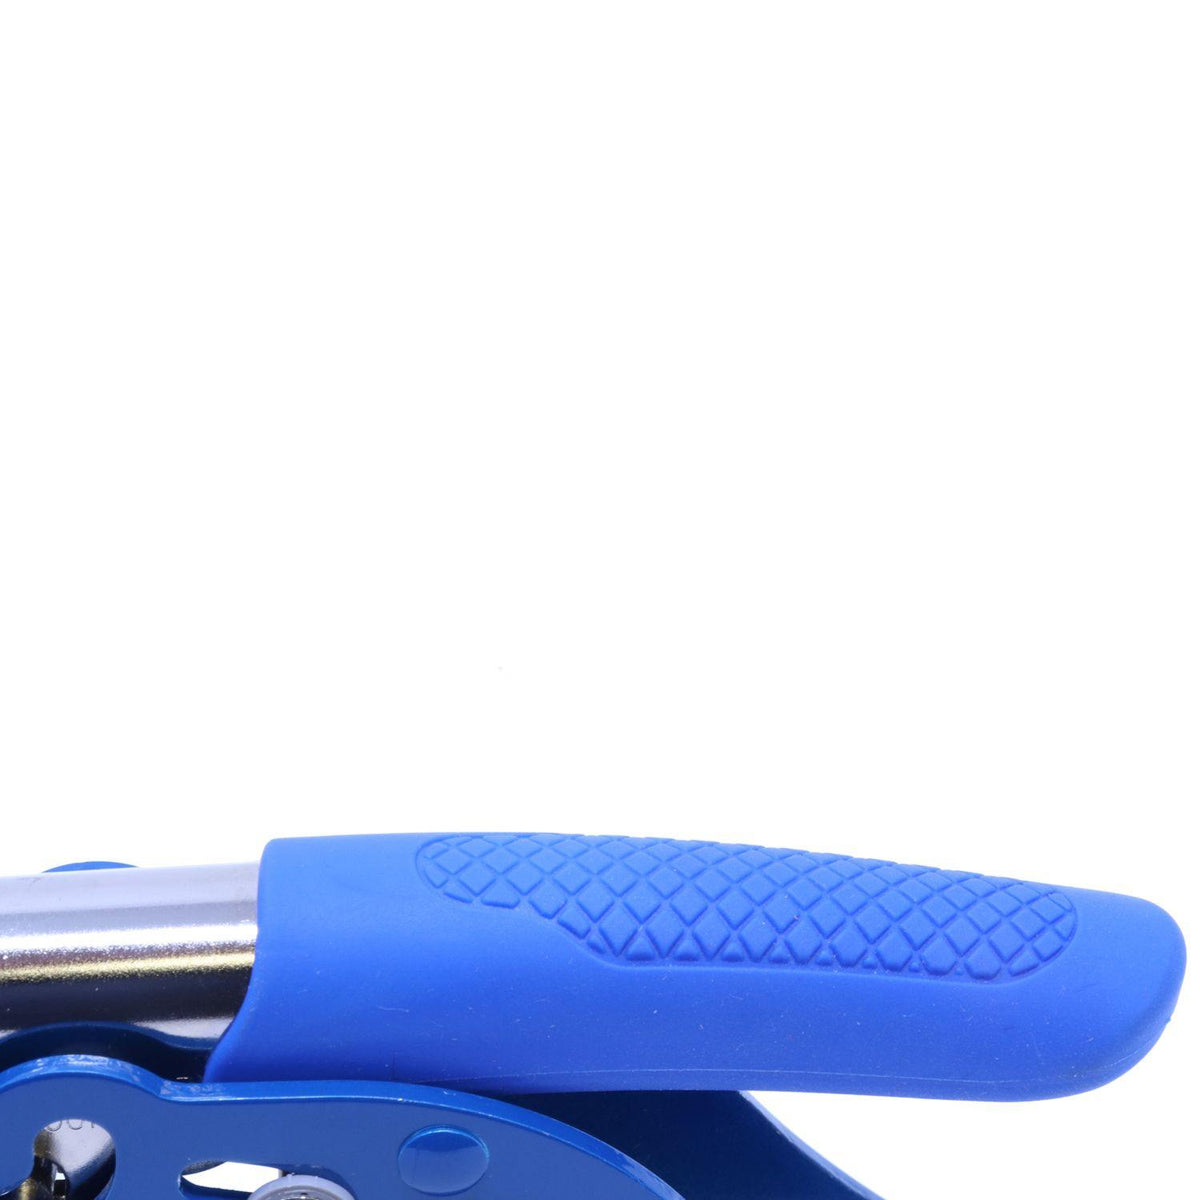 Public Weighmaster Blue Soft Seal Handheld Embosser - Engineer Seal Stamps - Embosser Type_Handheld, Embosser Type_Soft Seal, Type of Use_Professional